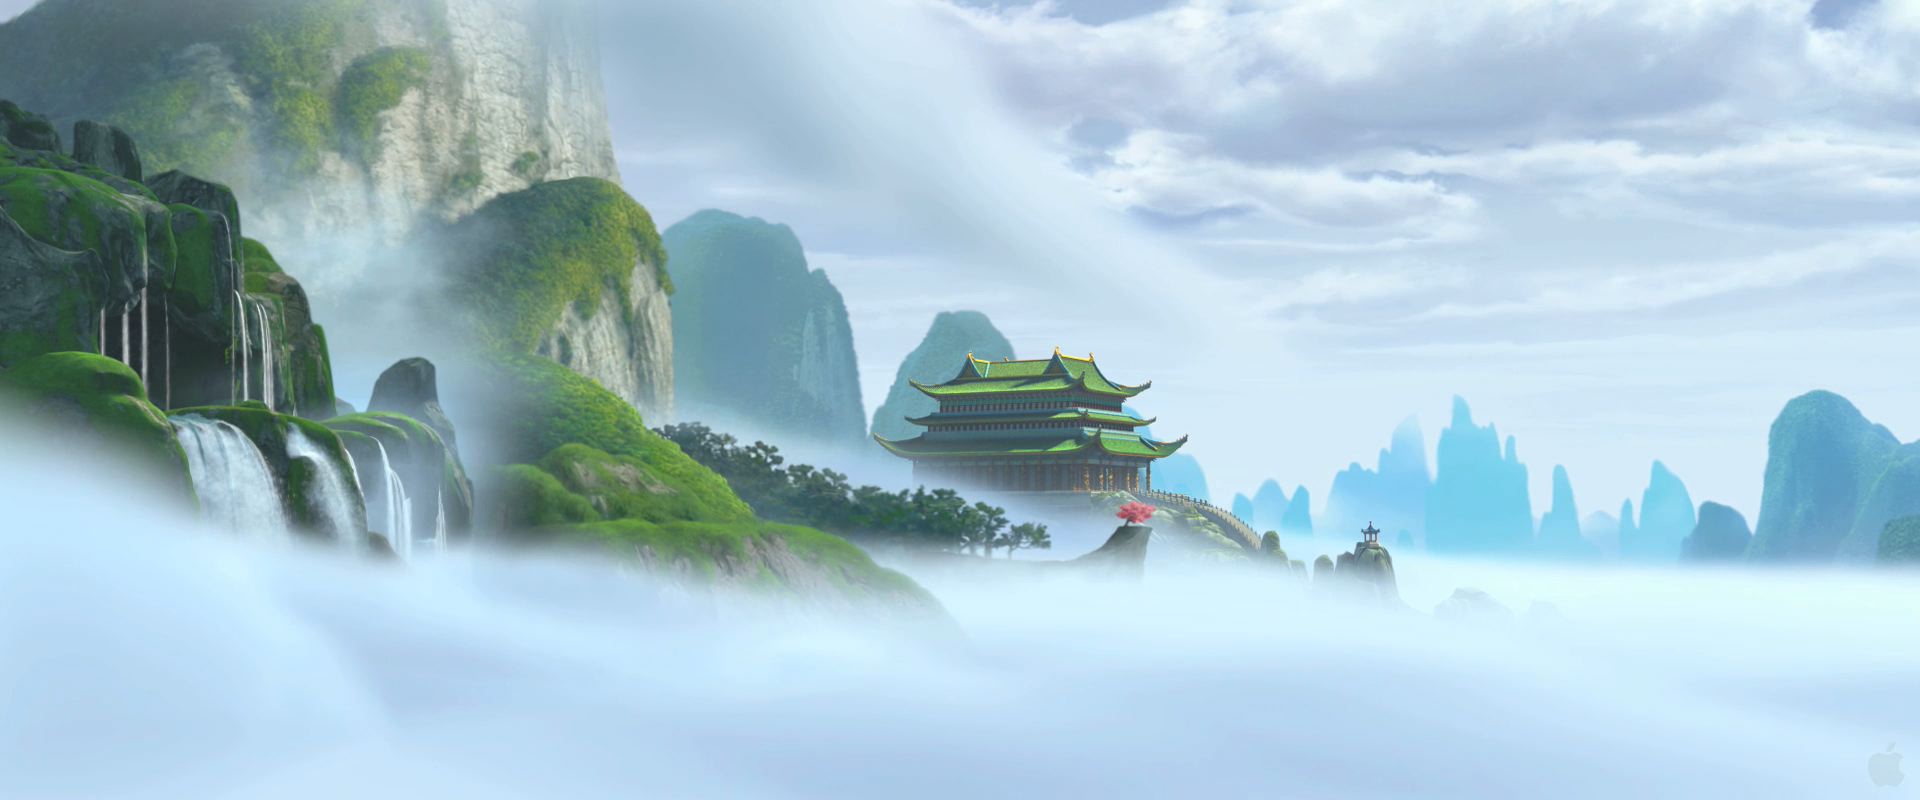 28 kung fu panda Wallpaper backgrounds - Desktop Backgrounds